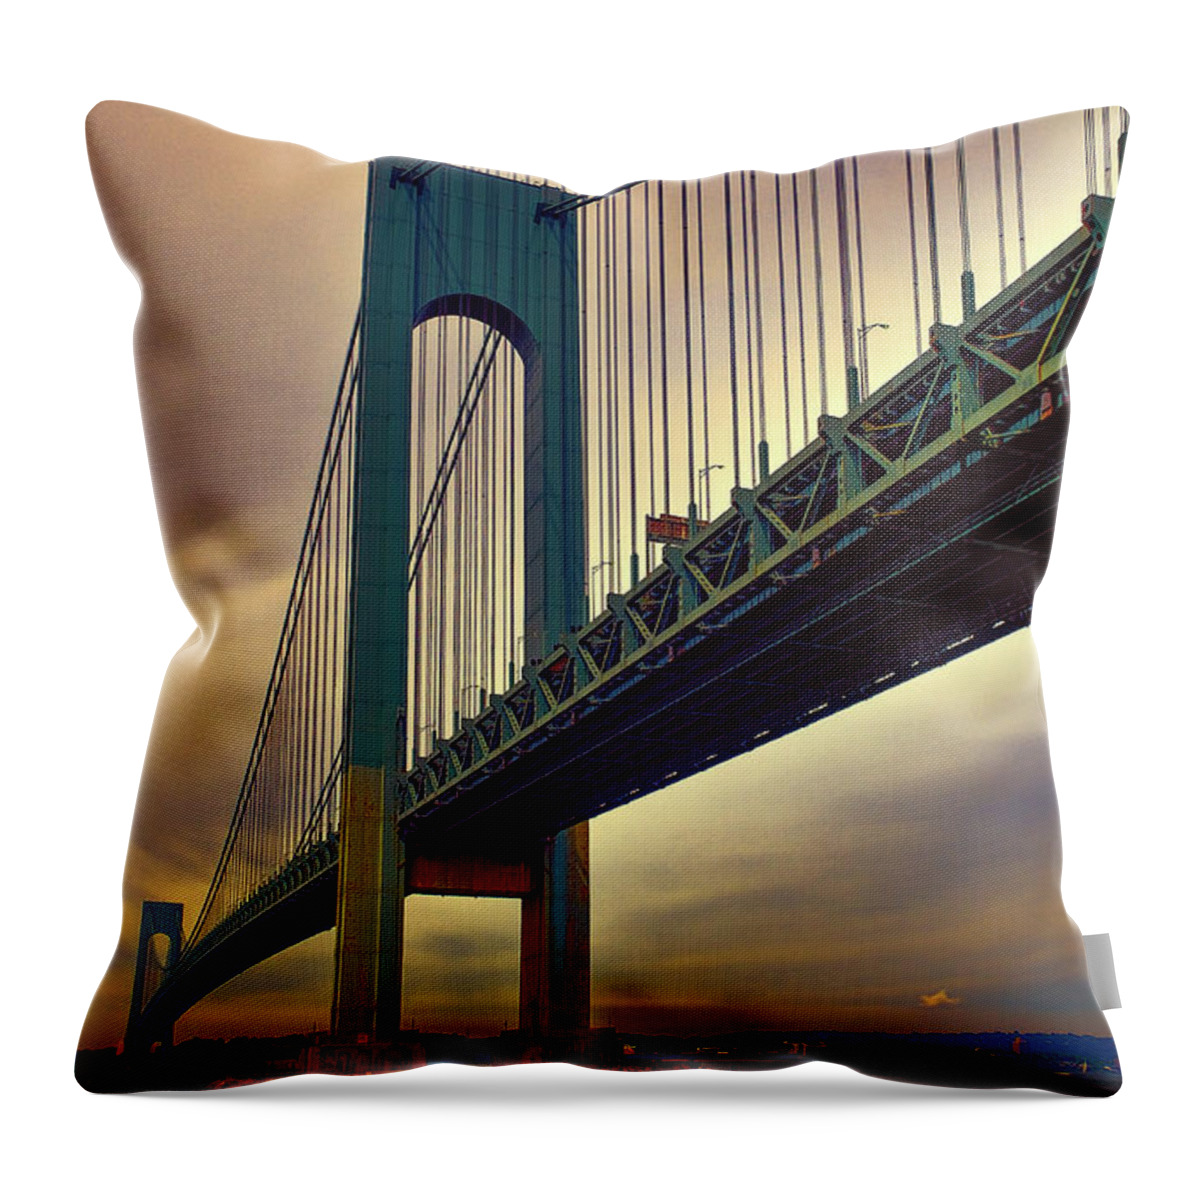 Brooklyn Throw Pillow featuring the photograph Verrazano Bridge - NYC by Louis Dallara